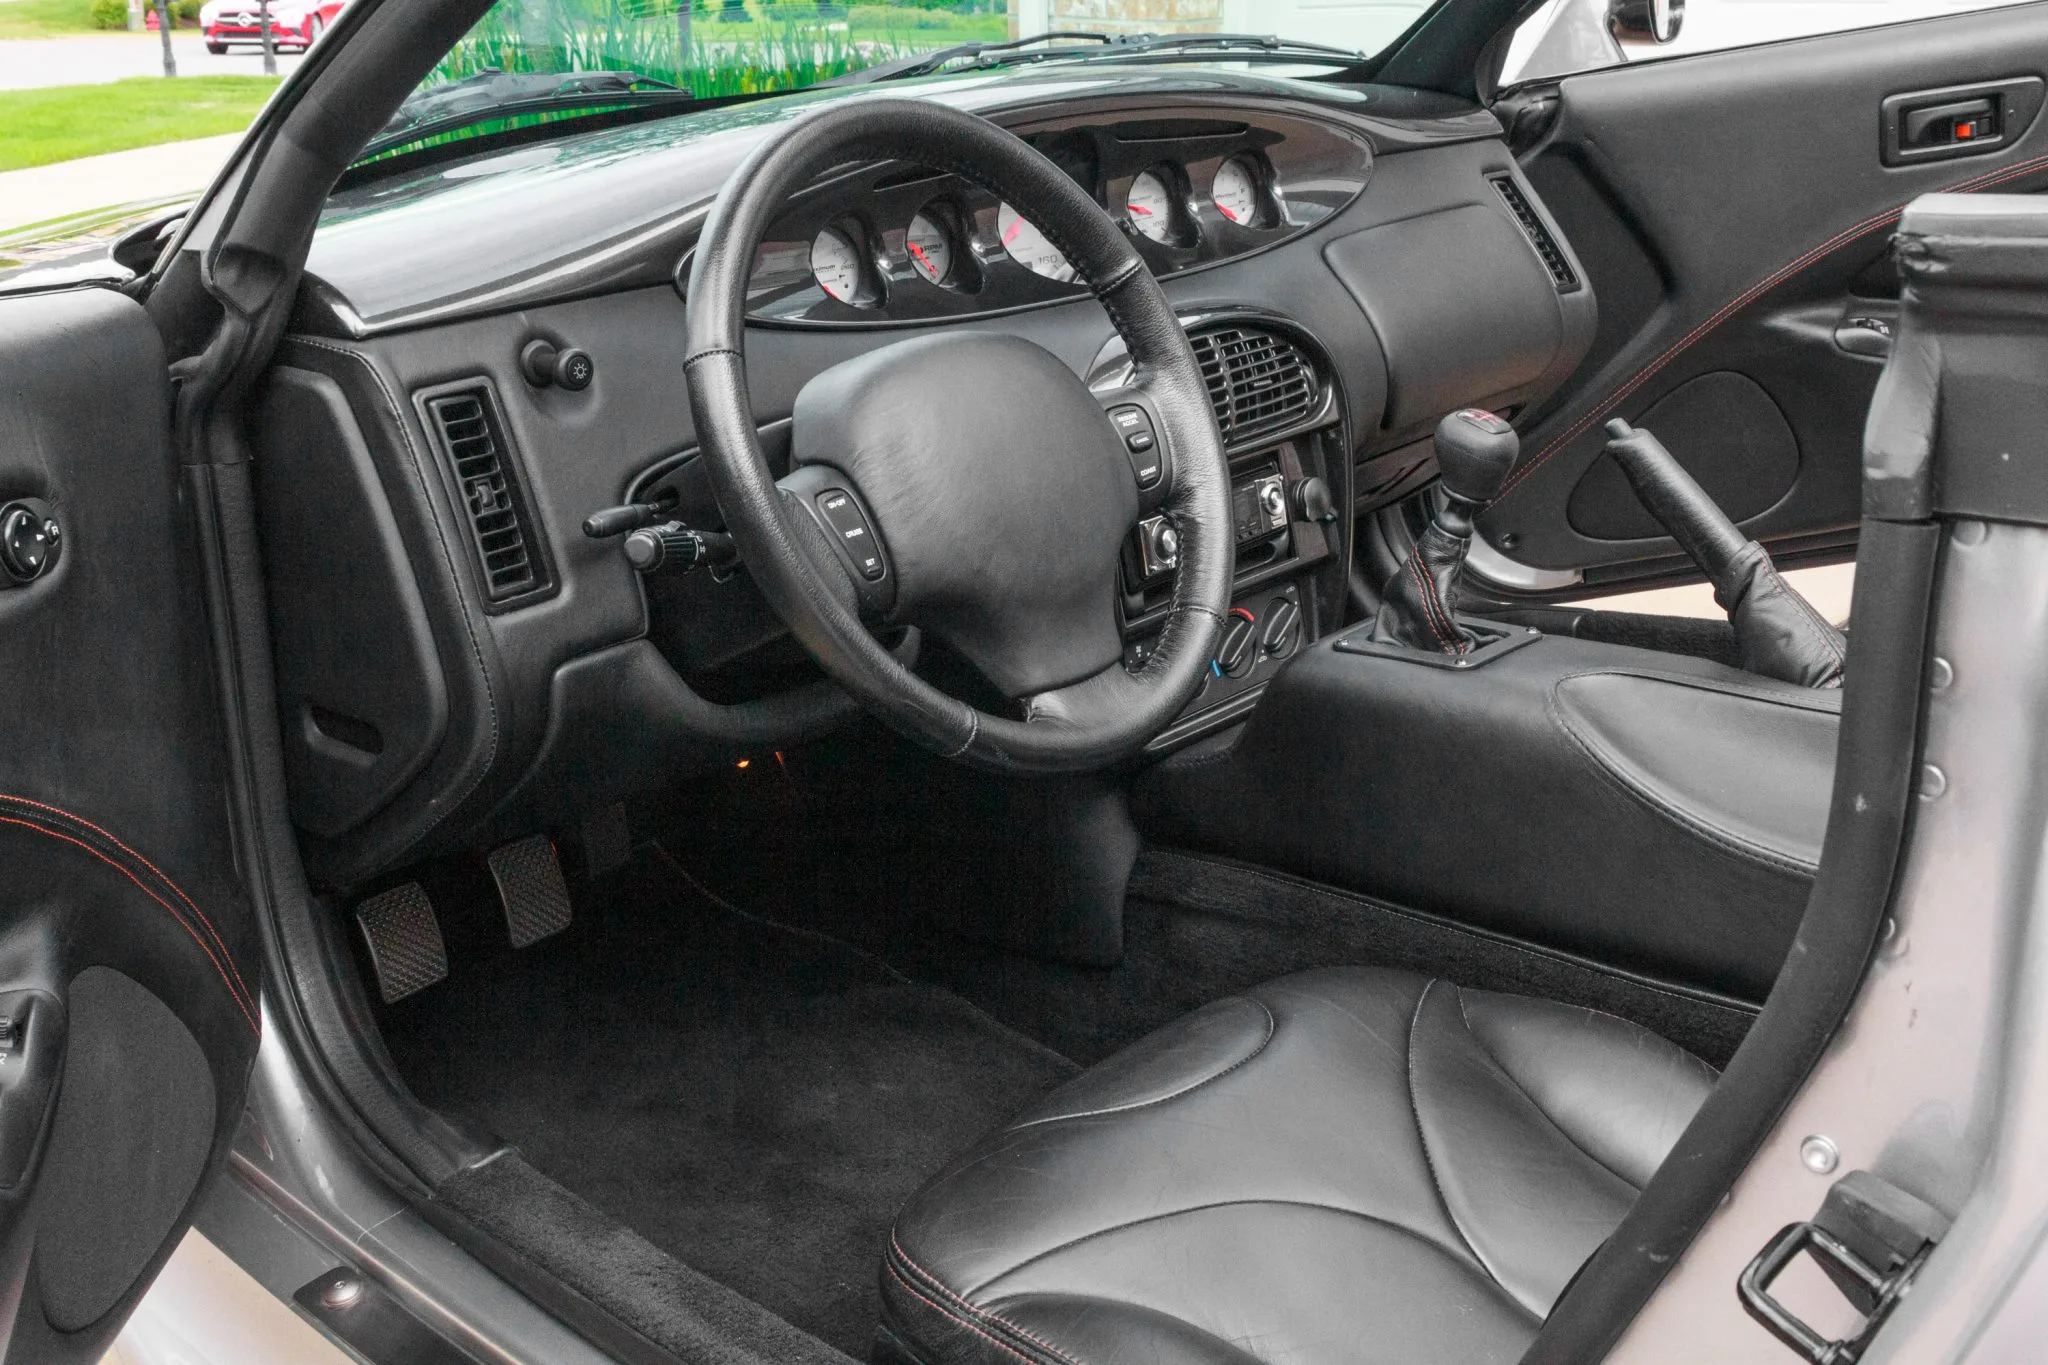 Prowler with Corvette LS V8, interior, photo 01.